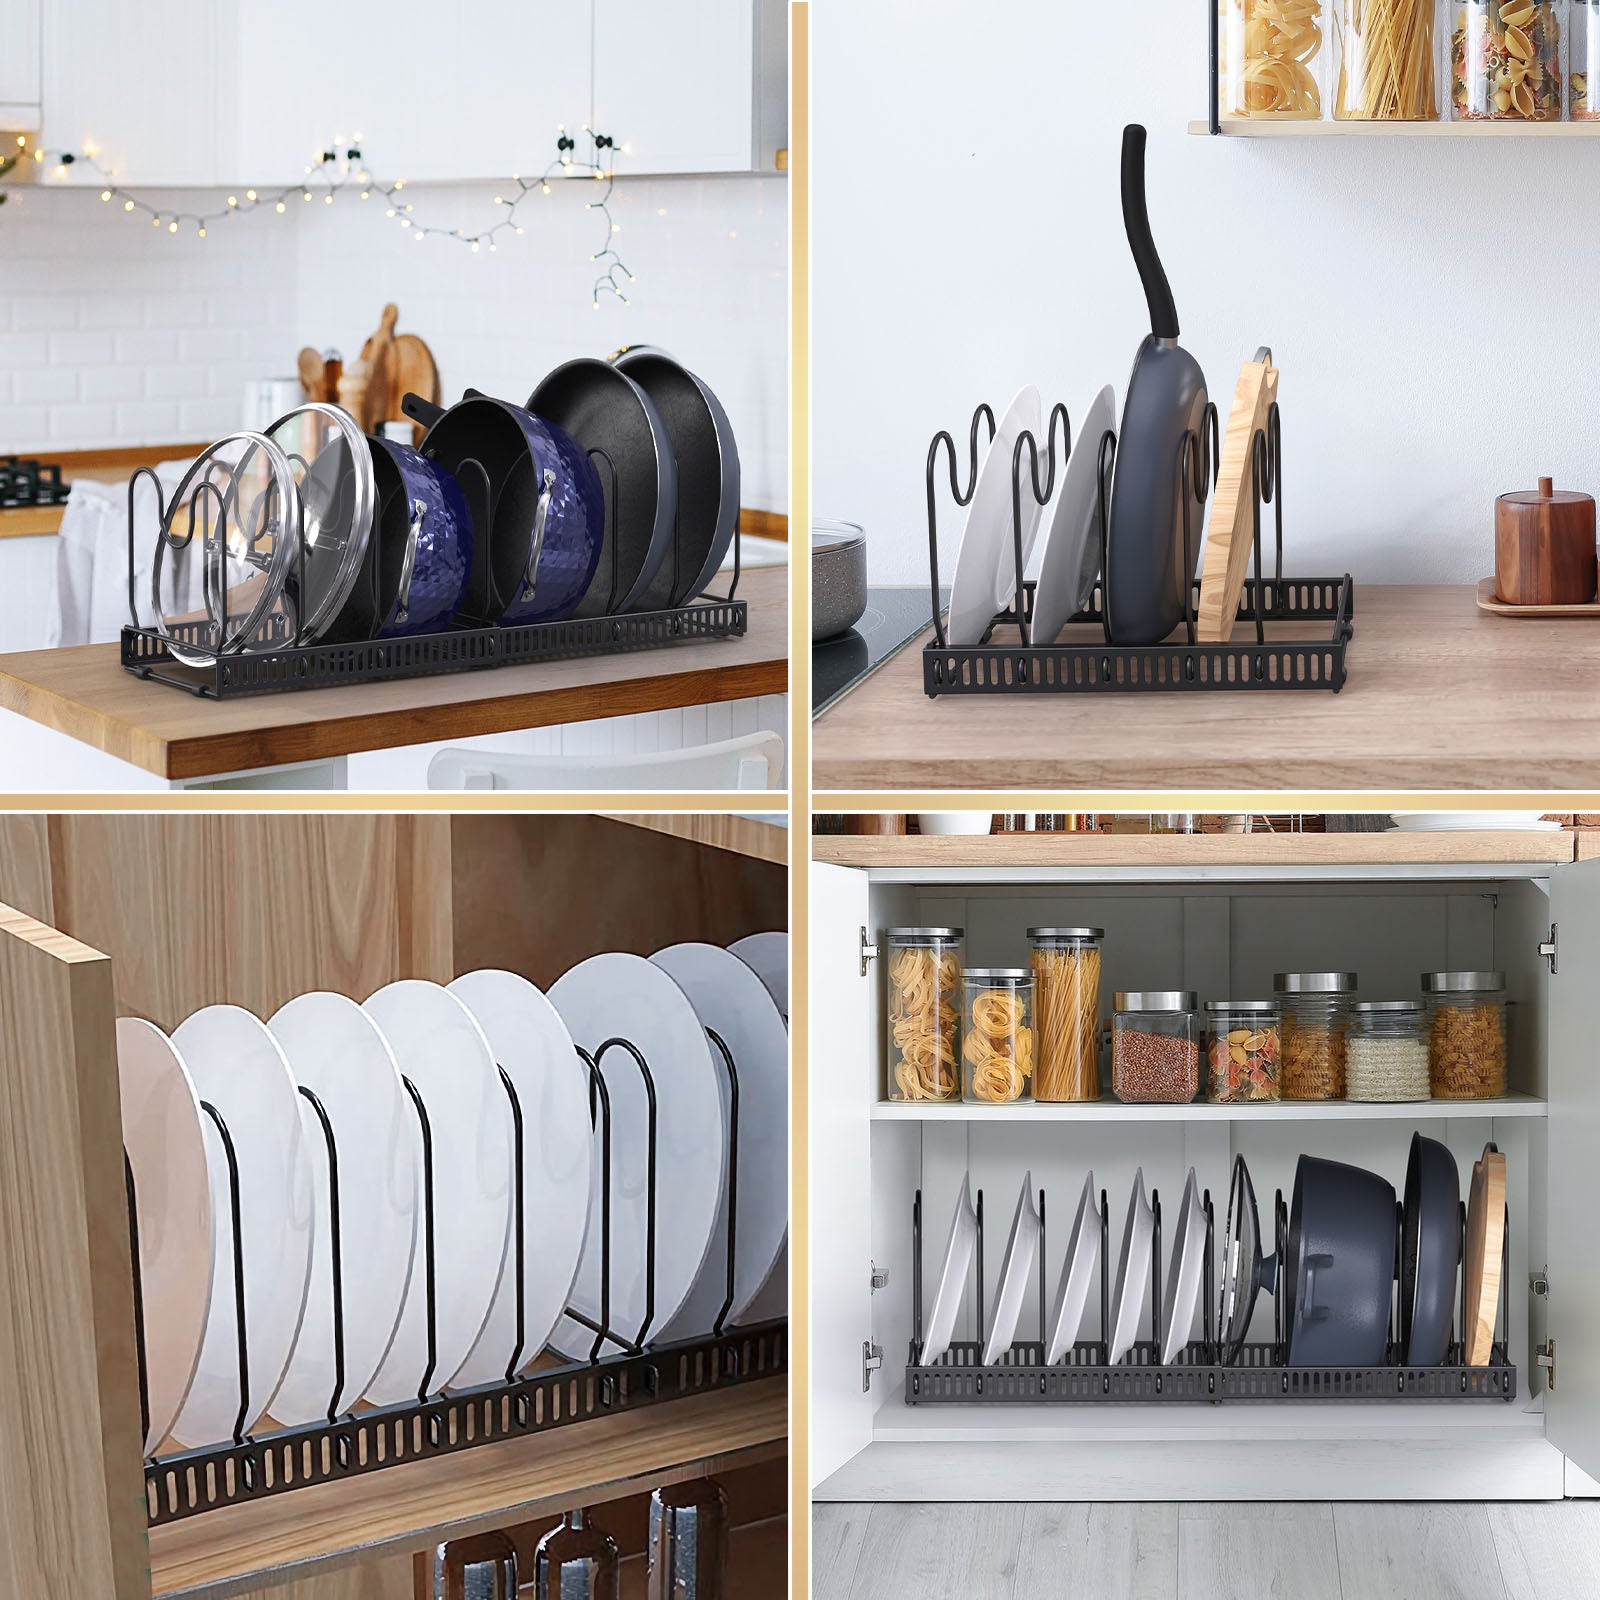 Expandable Pans Organizer Rack, Pot And Pan Lid Holder Kitchen utensils